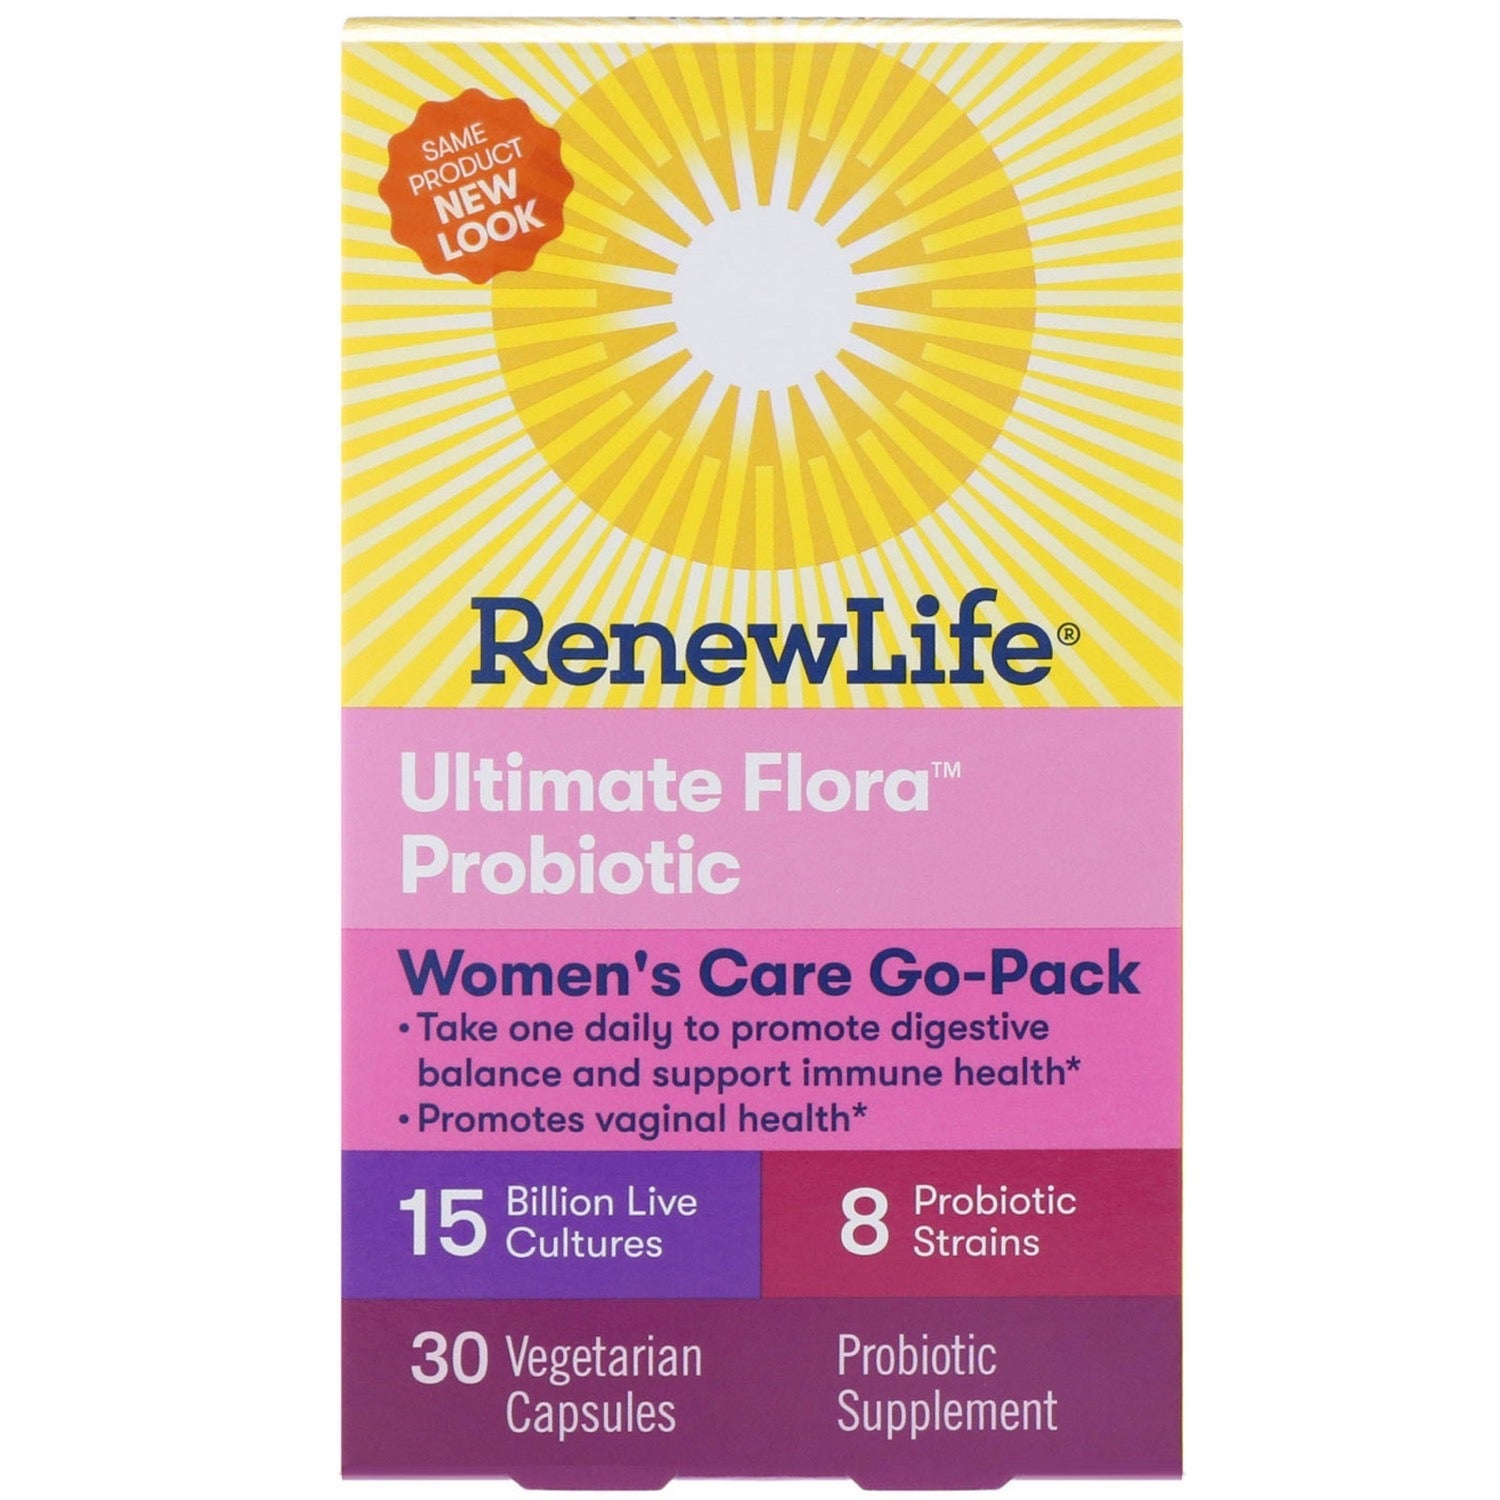 Renew Life Re Ultimate Flora, Women's Care Go-Pack Probiotic, 15 Billion Live Cultures, 30 Vegetarian Capsules